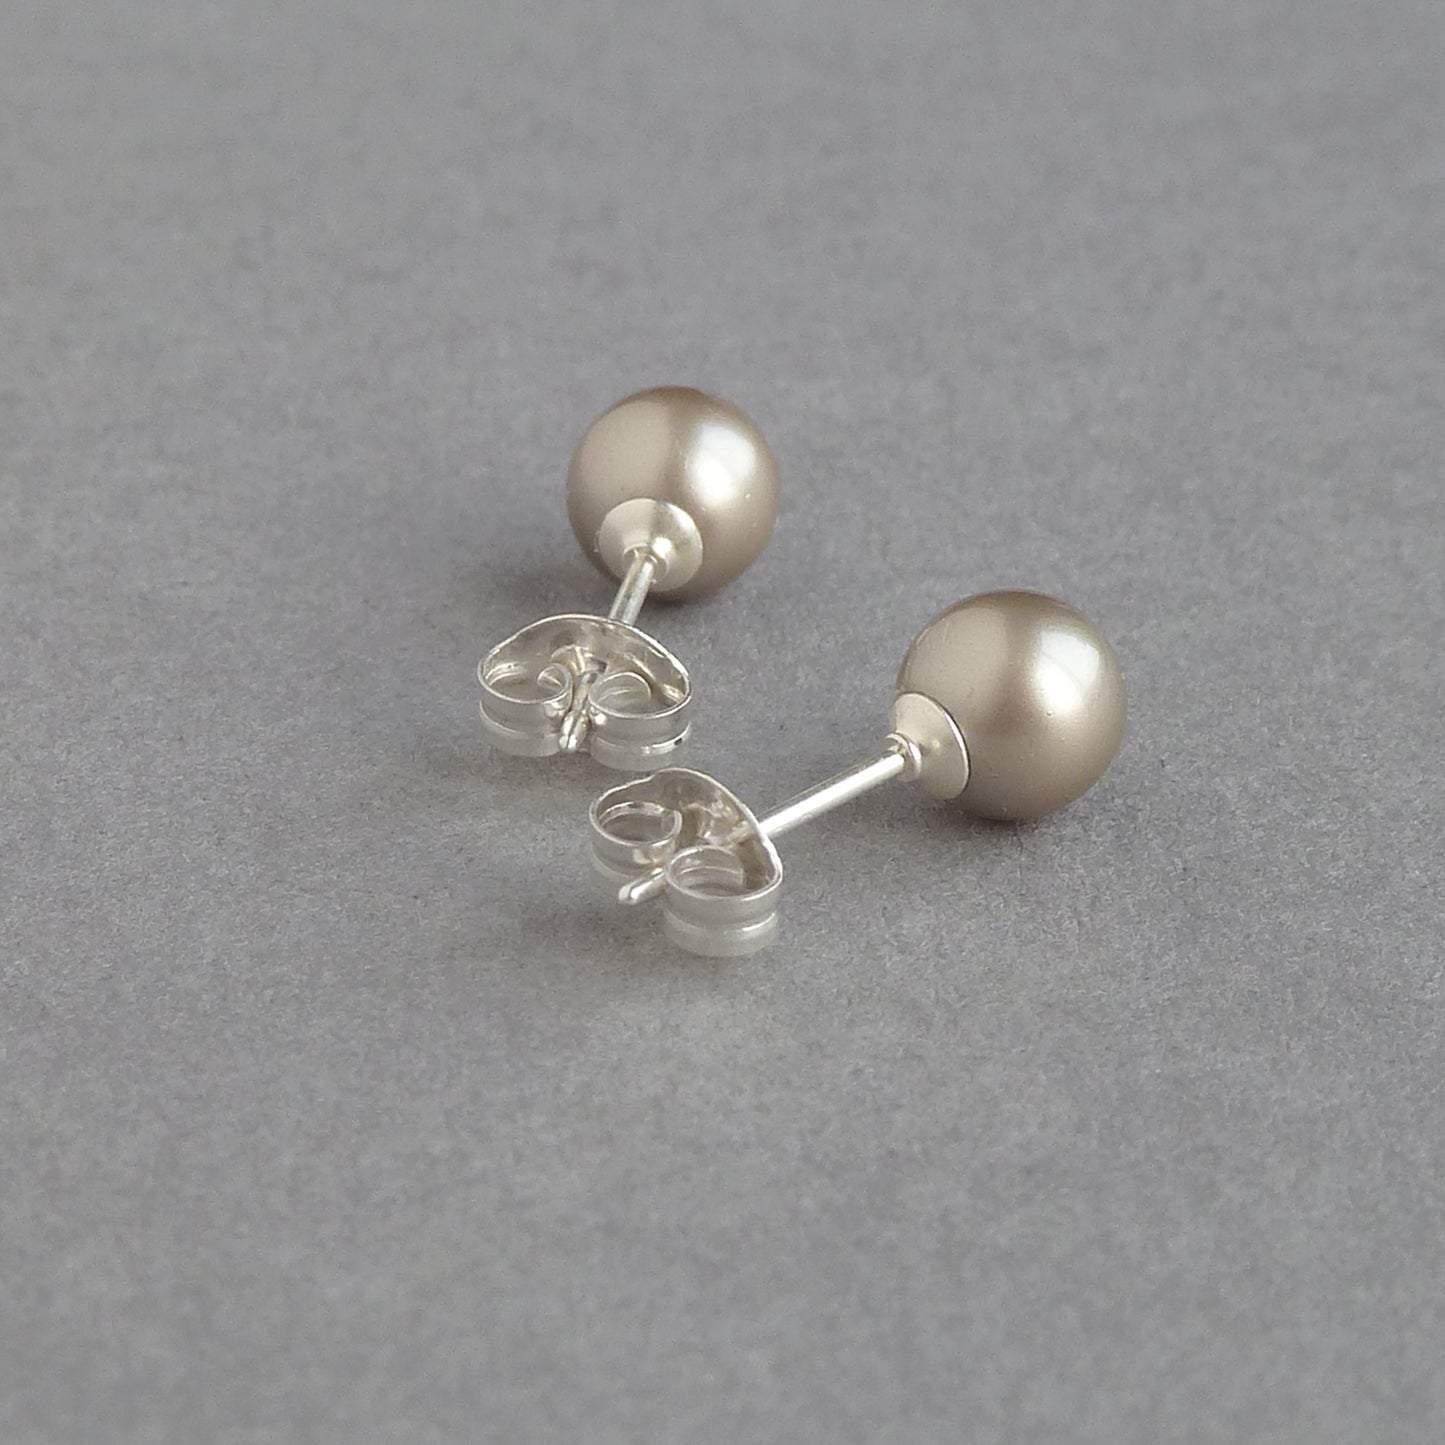 6mm champagne pearl stud earrings